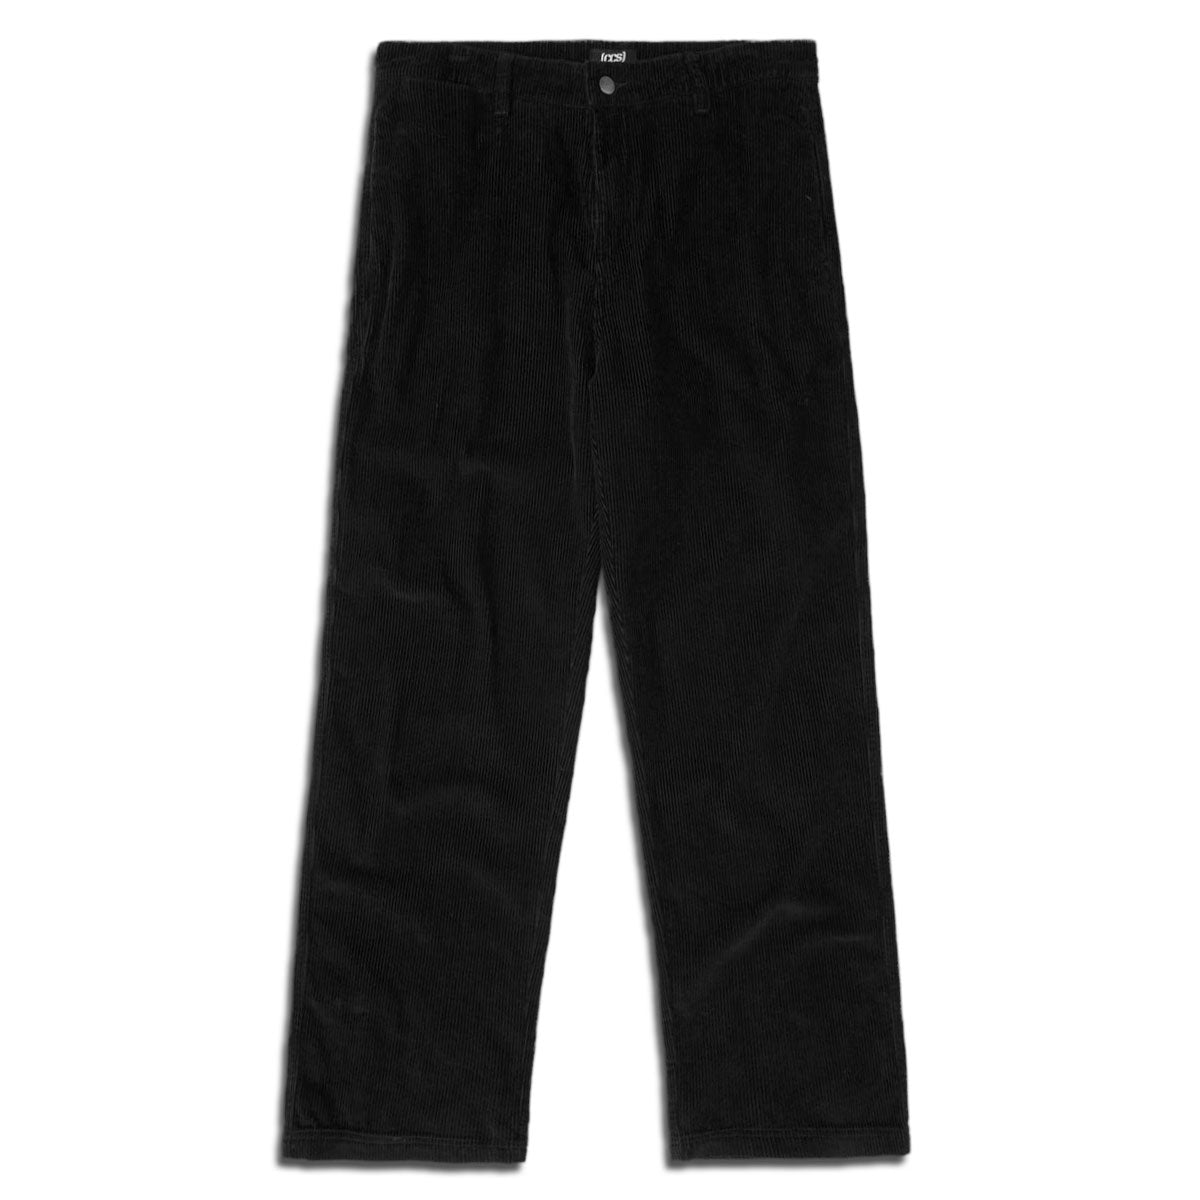 CCS Original Relaxed Corduroy Pants - Black